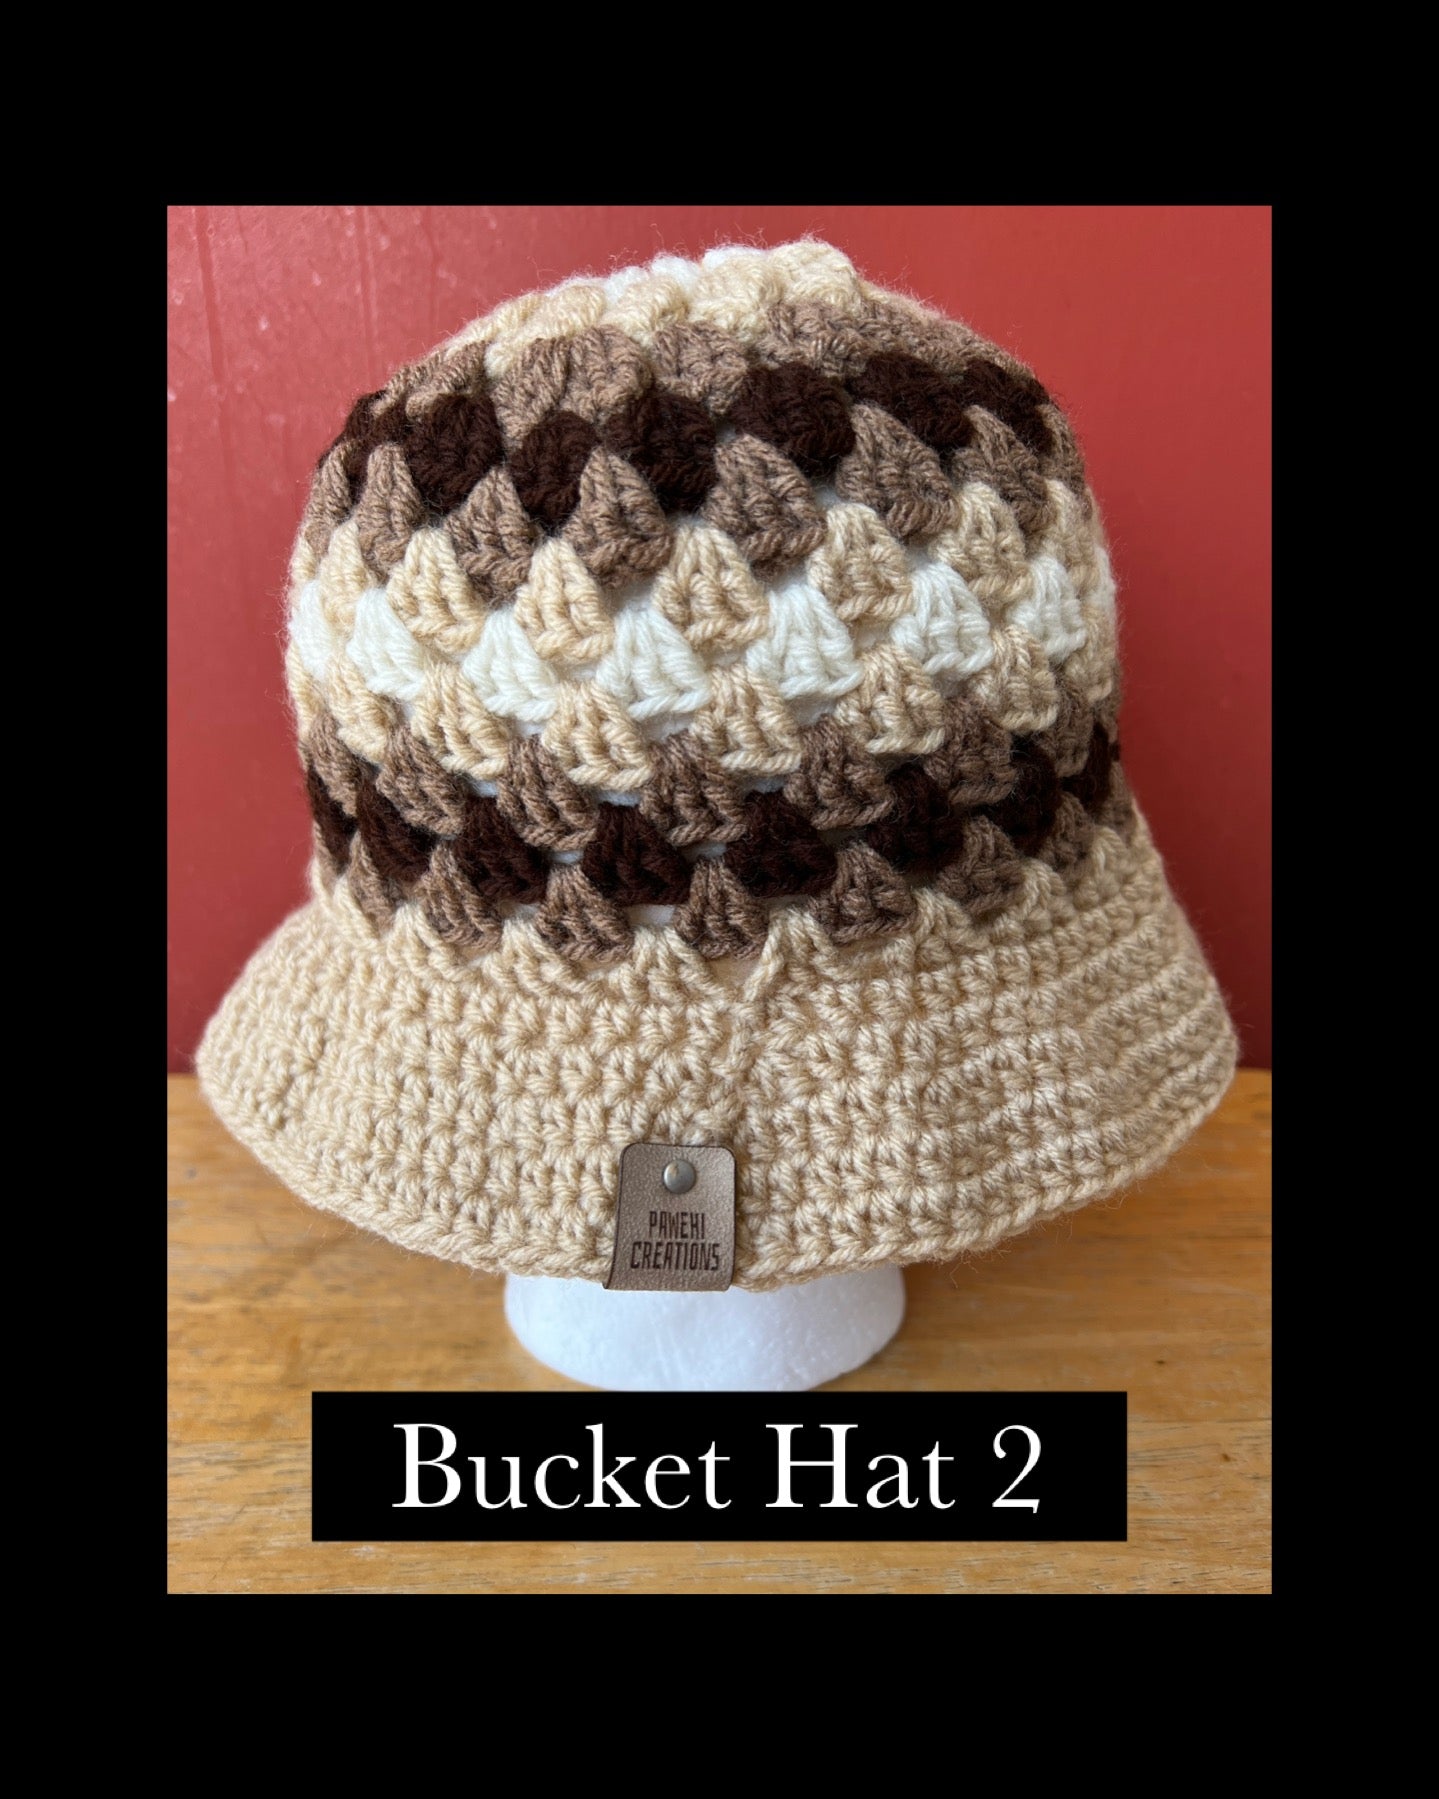 Pop-Up Mākeke - Pawehi Creations - Crochet Bucket  Hat - Style #2